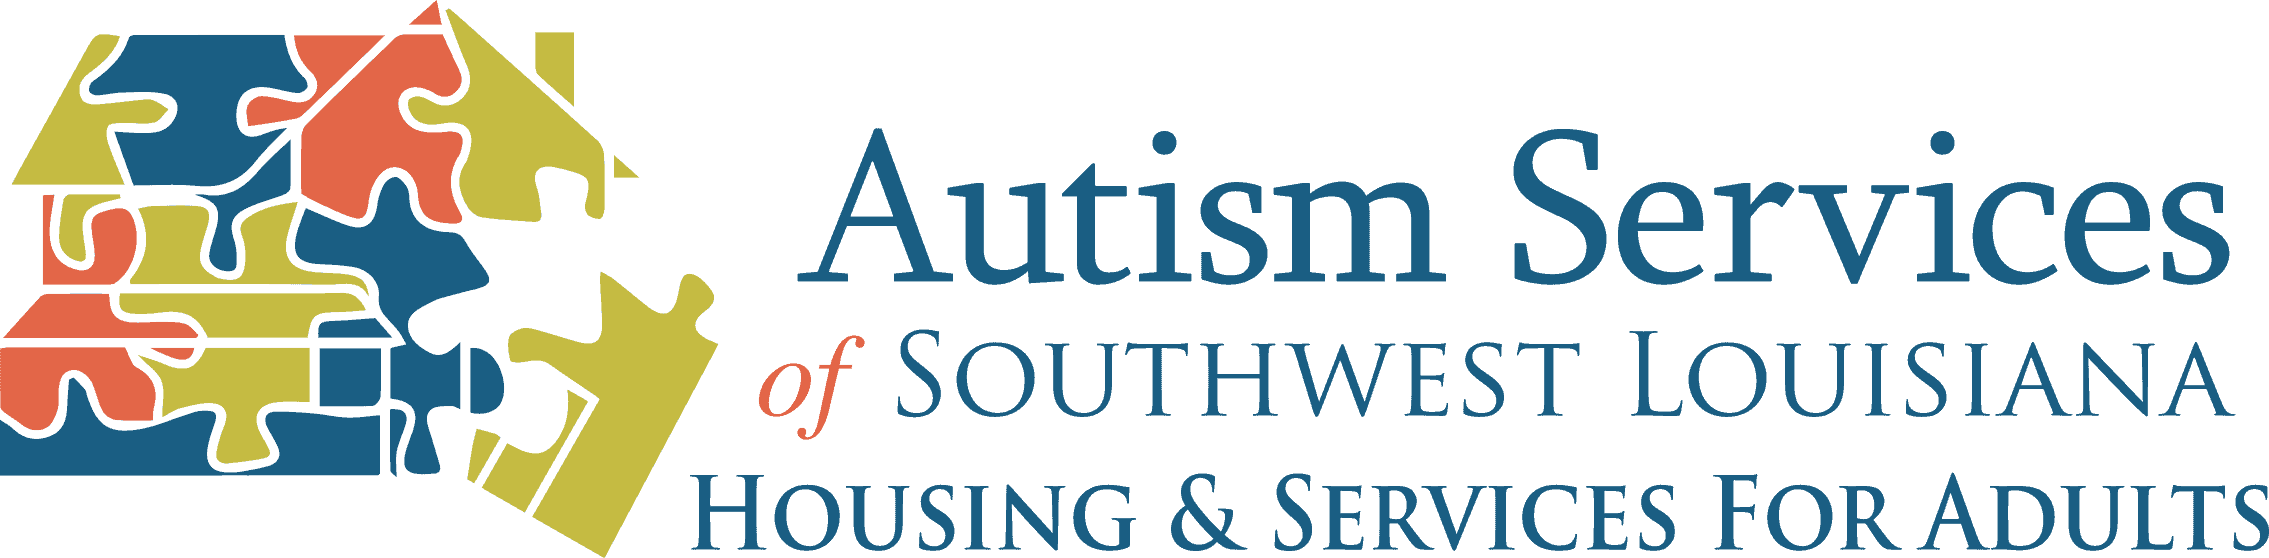 Autism Services of Southwest Louisiana